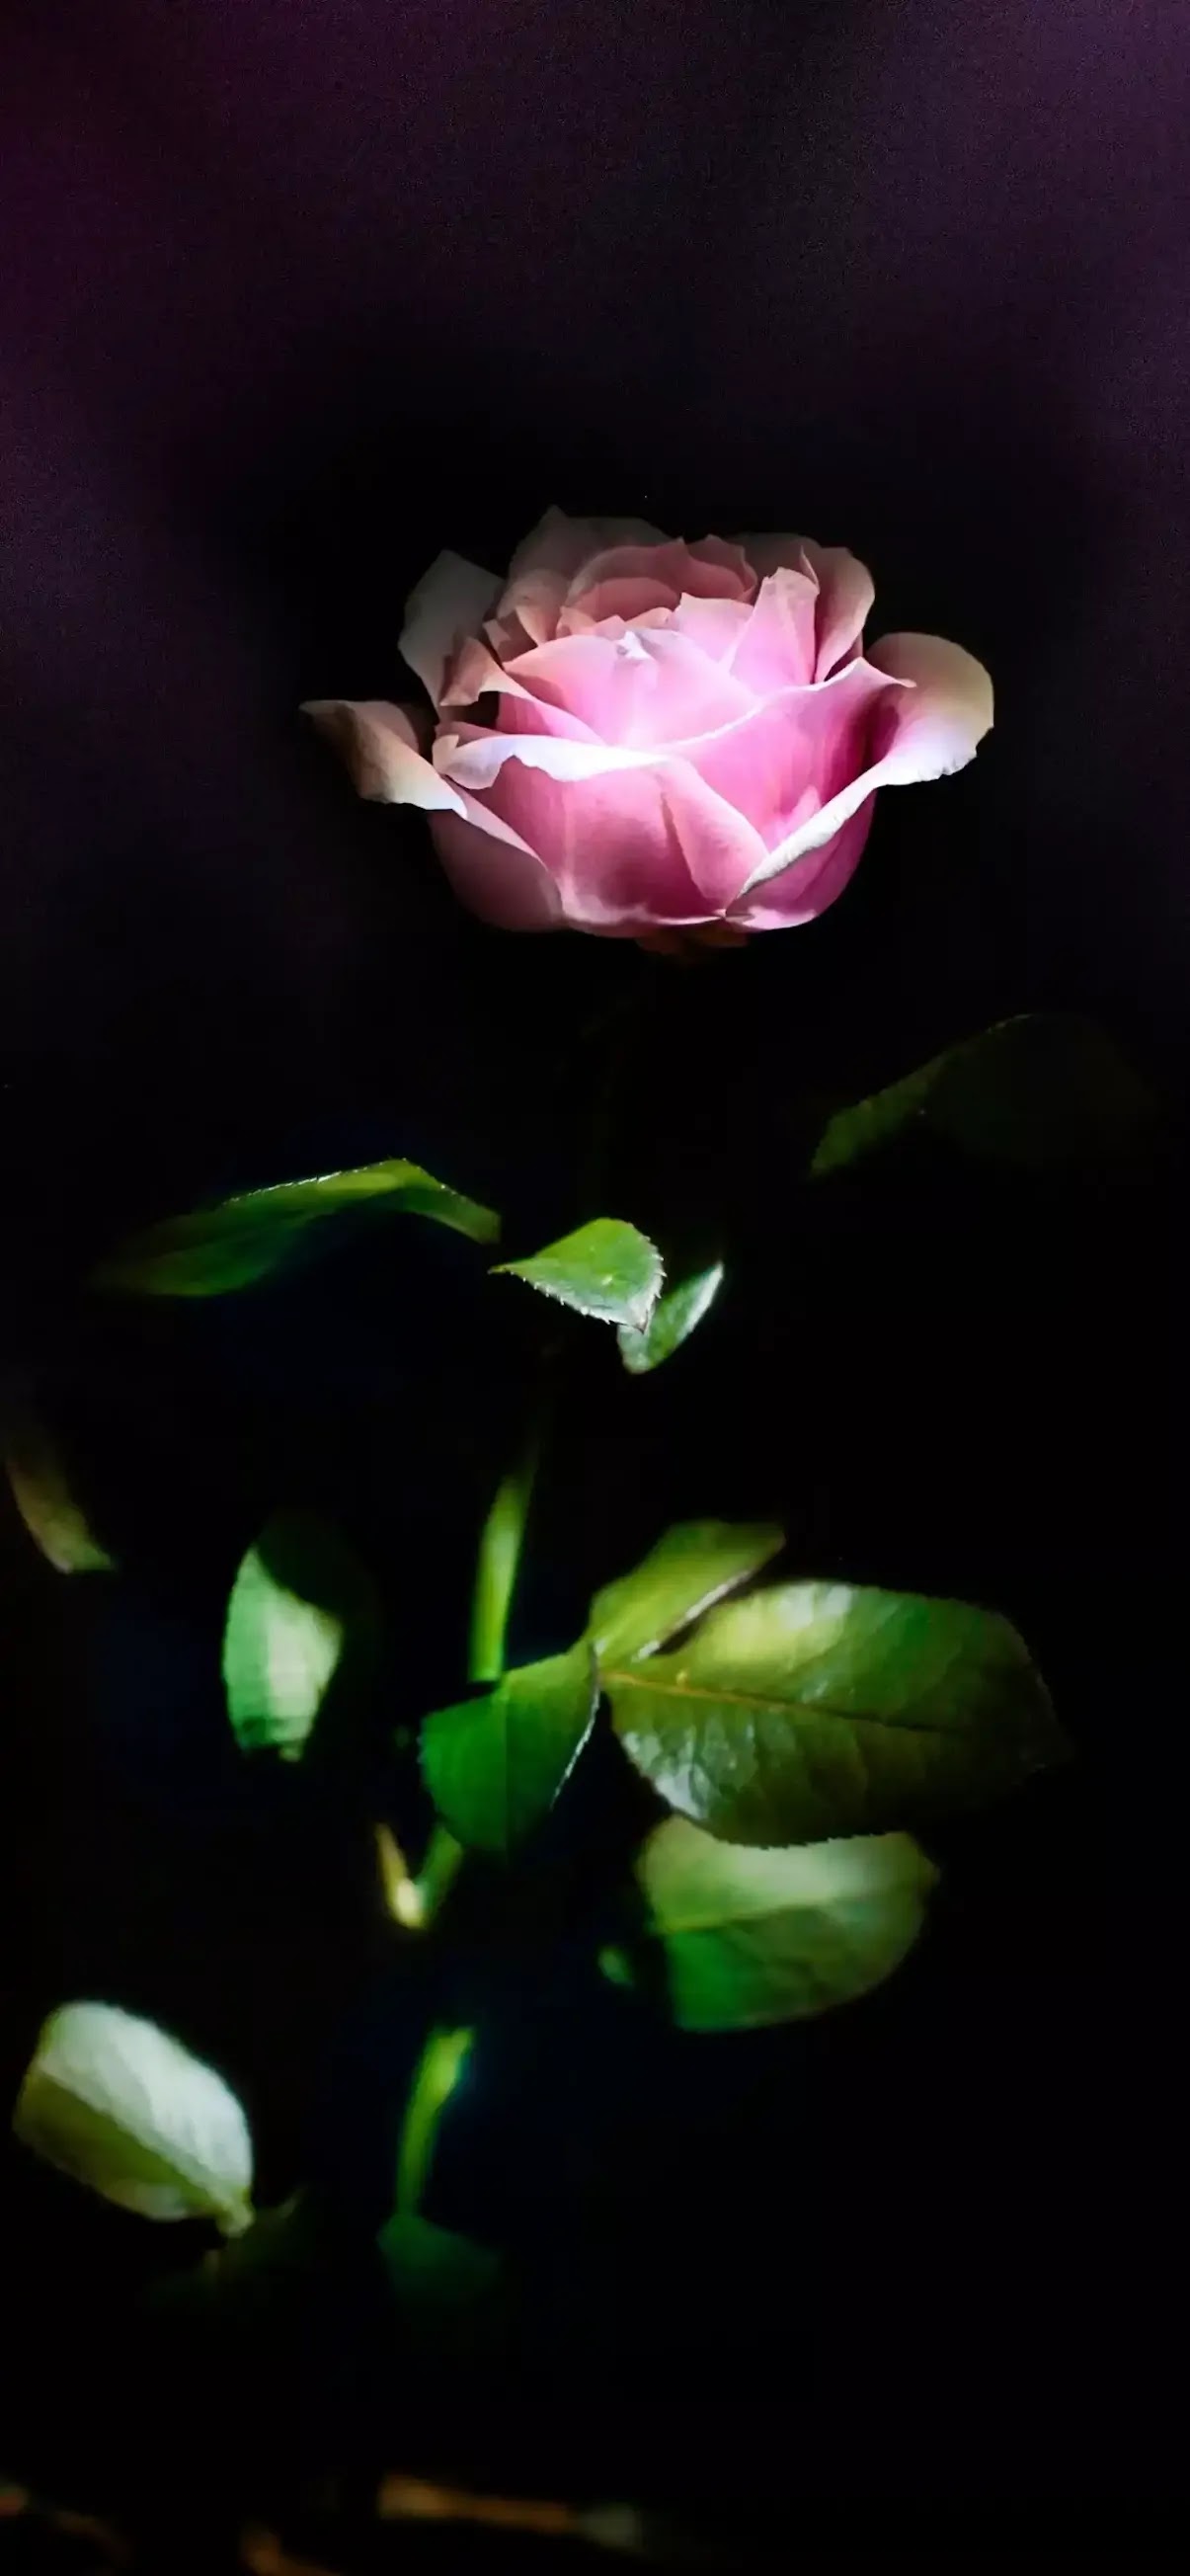 Black pink rose wallpaper for iPhone mobile